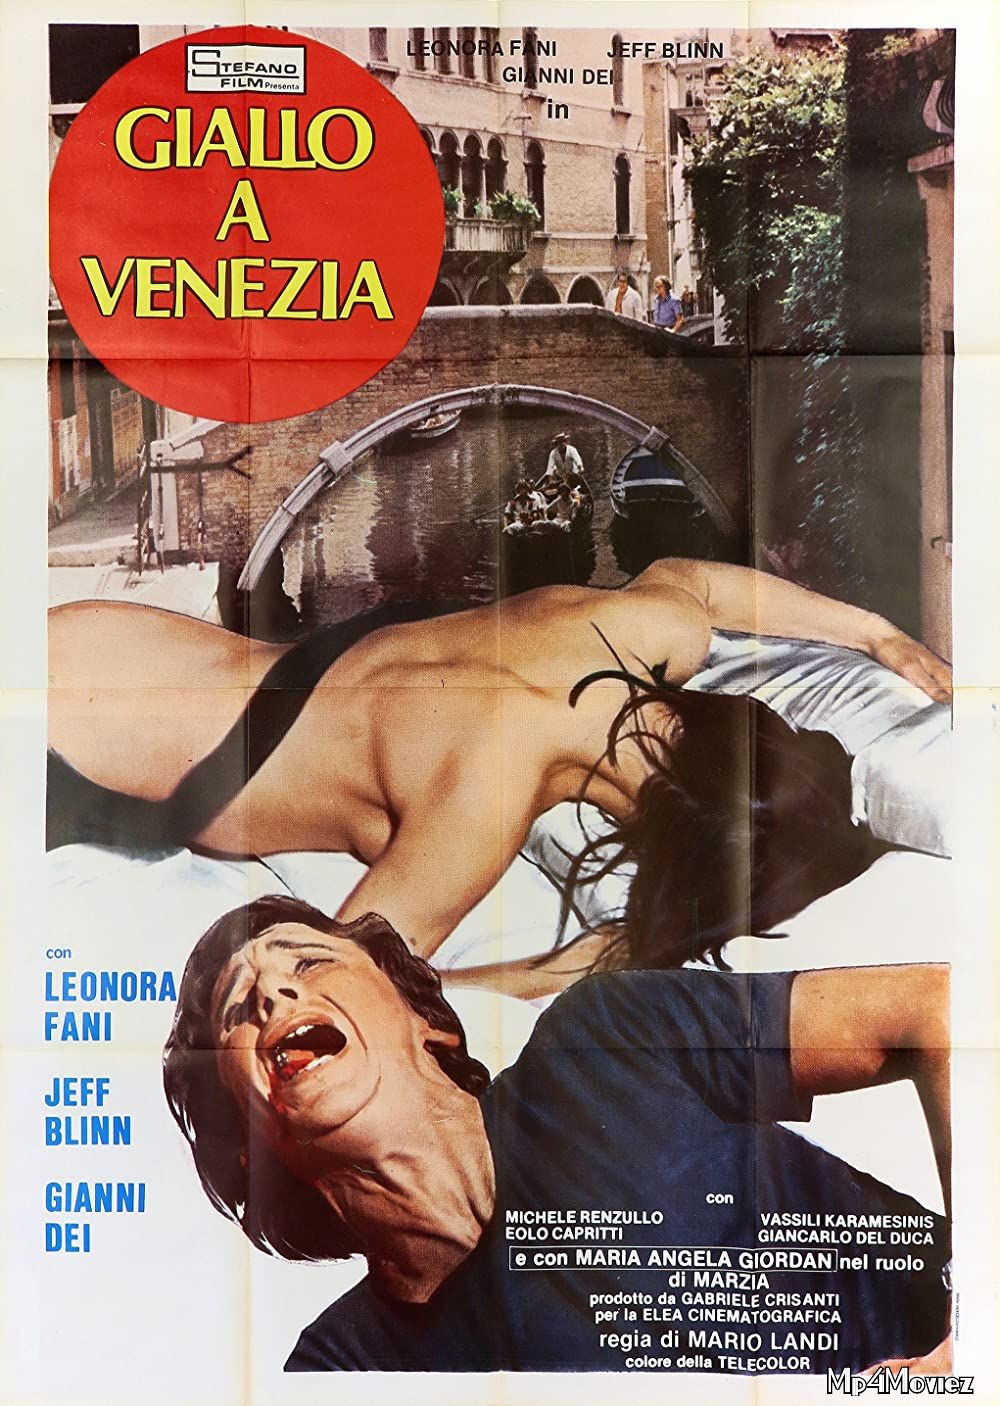 18+ Giallo A Venezia (1979) English BluRay download full movie